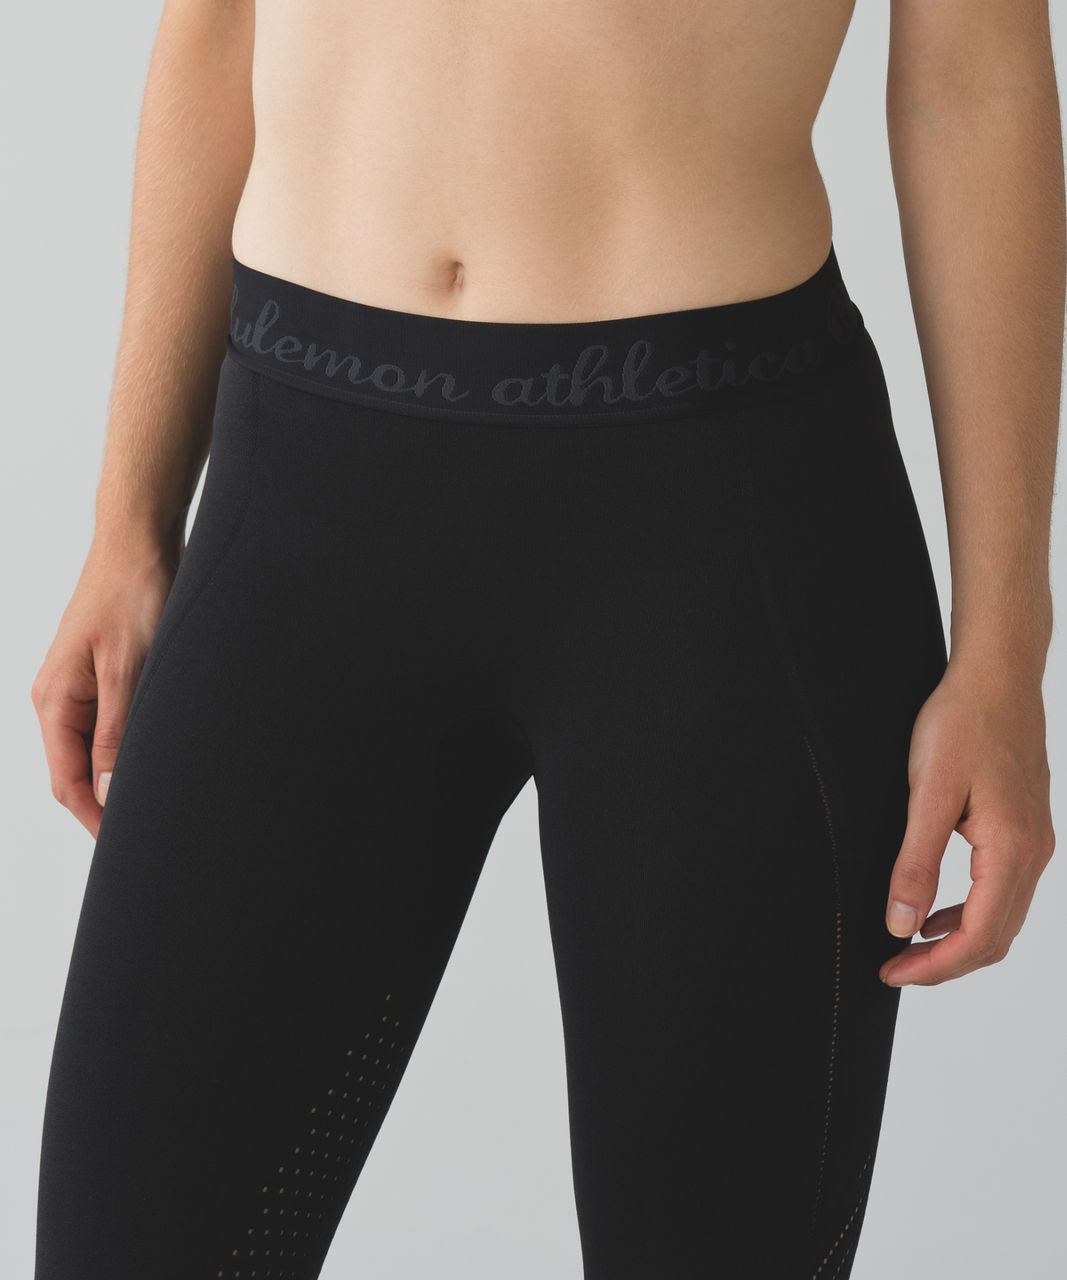 Lululemon Lulu time warp shapewear black leggings ltd ed. spellout waist  size 8 - Athletic apparel